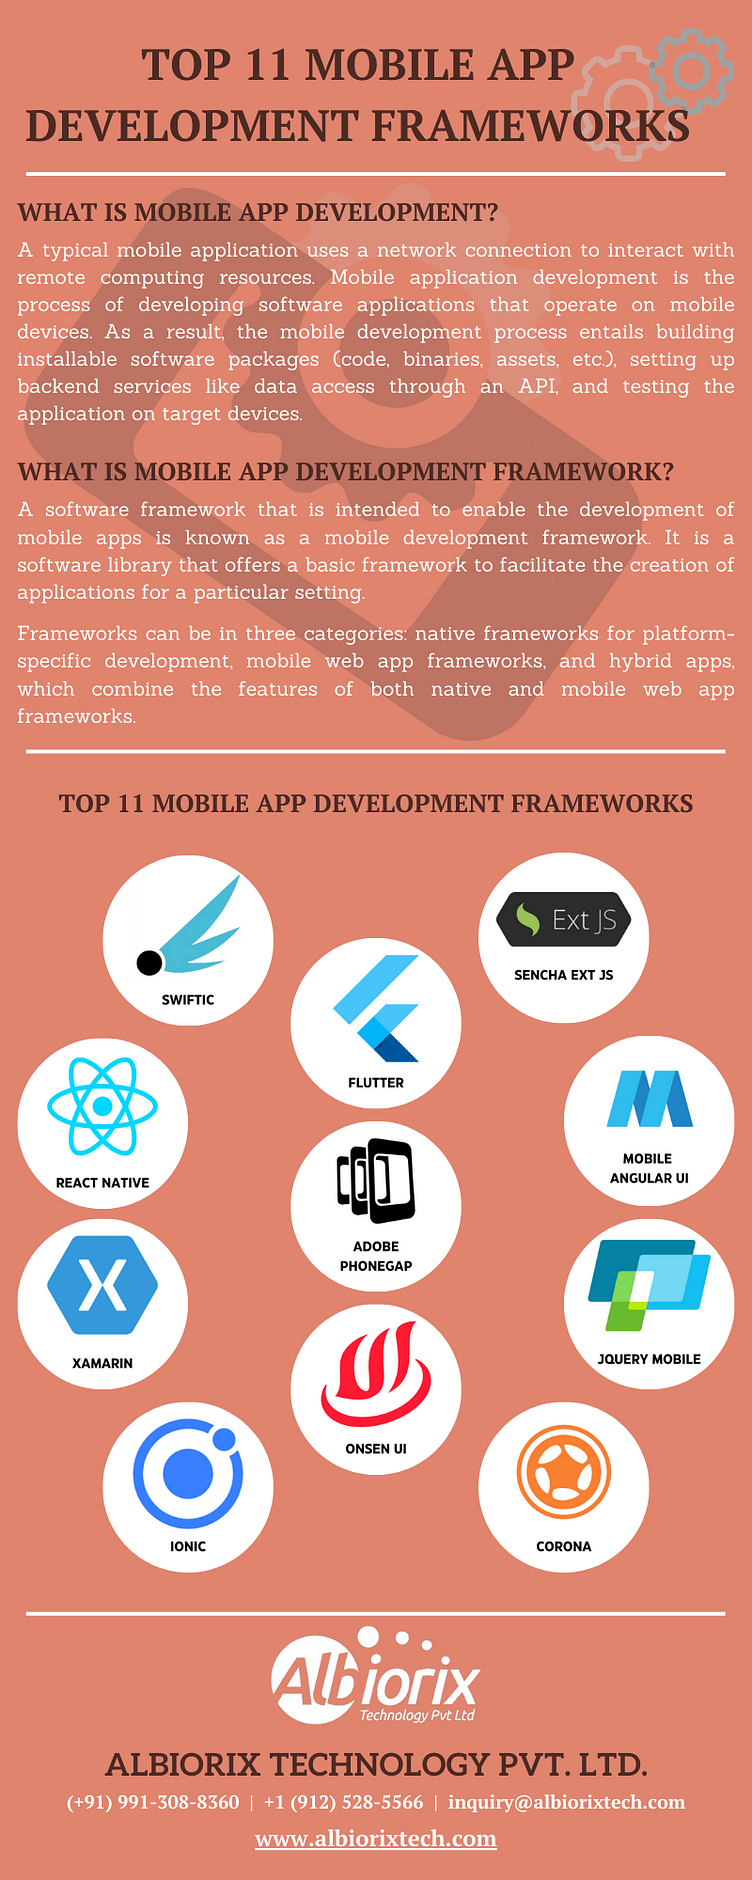 Top Mobile App Development Frameworks by Albiorix Technology on Dribbble